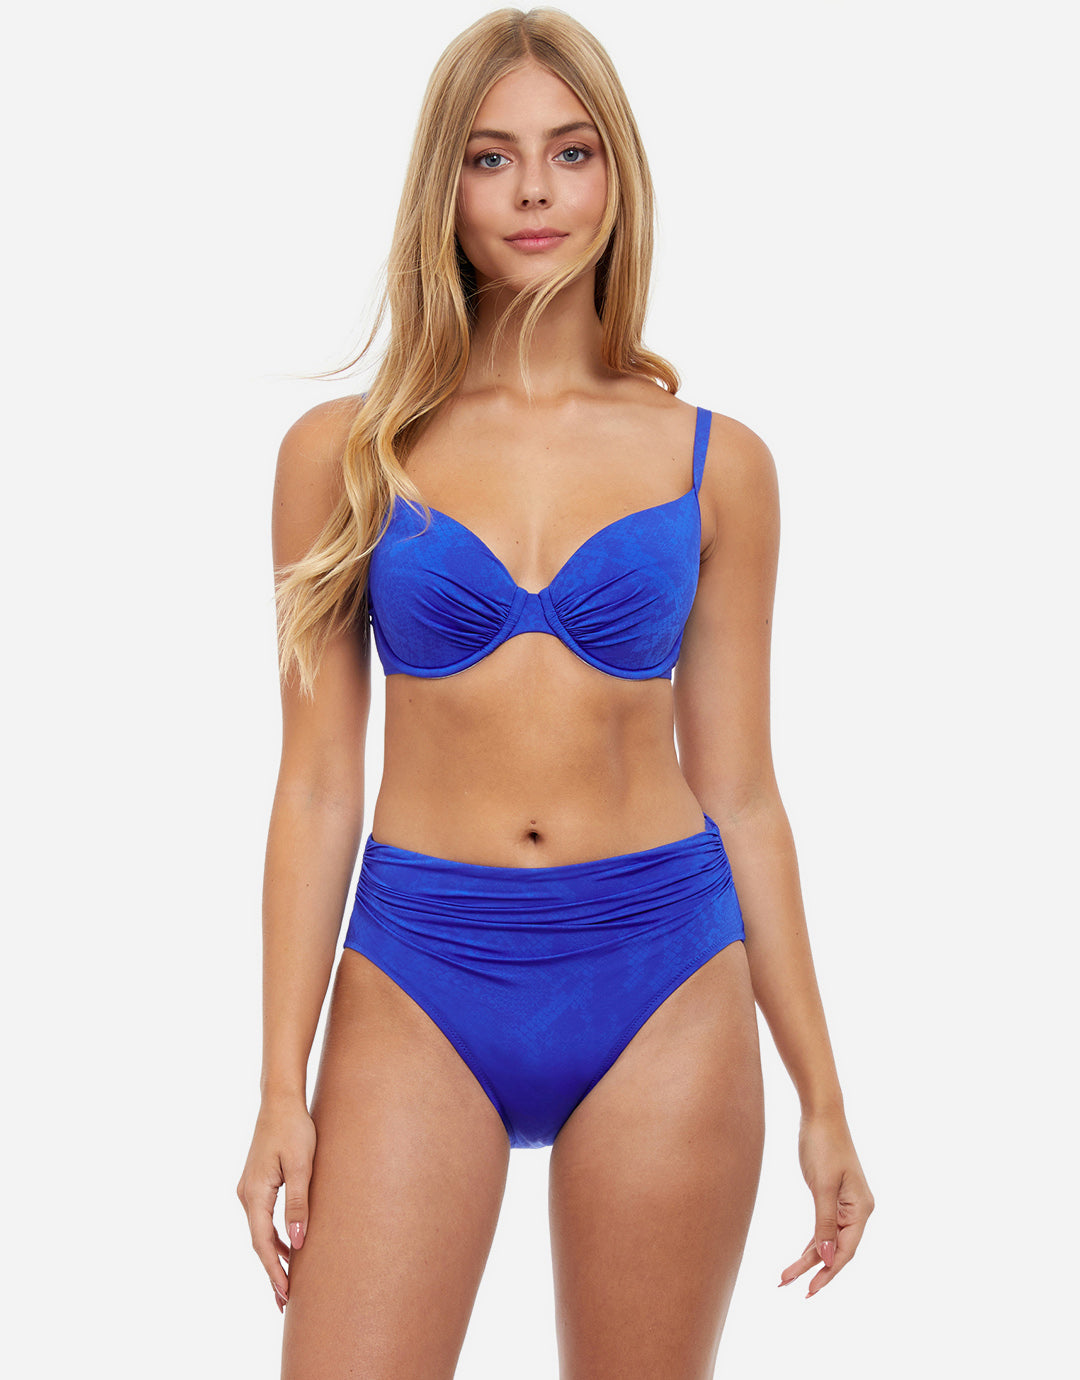 Profile Under My Skin Underwired D Cup Bikini Top - Royal Blue - Simply Beach UK